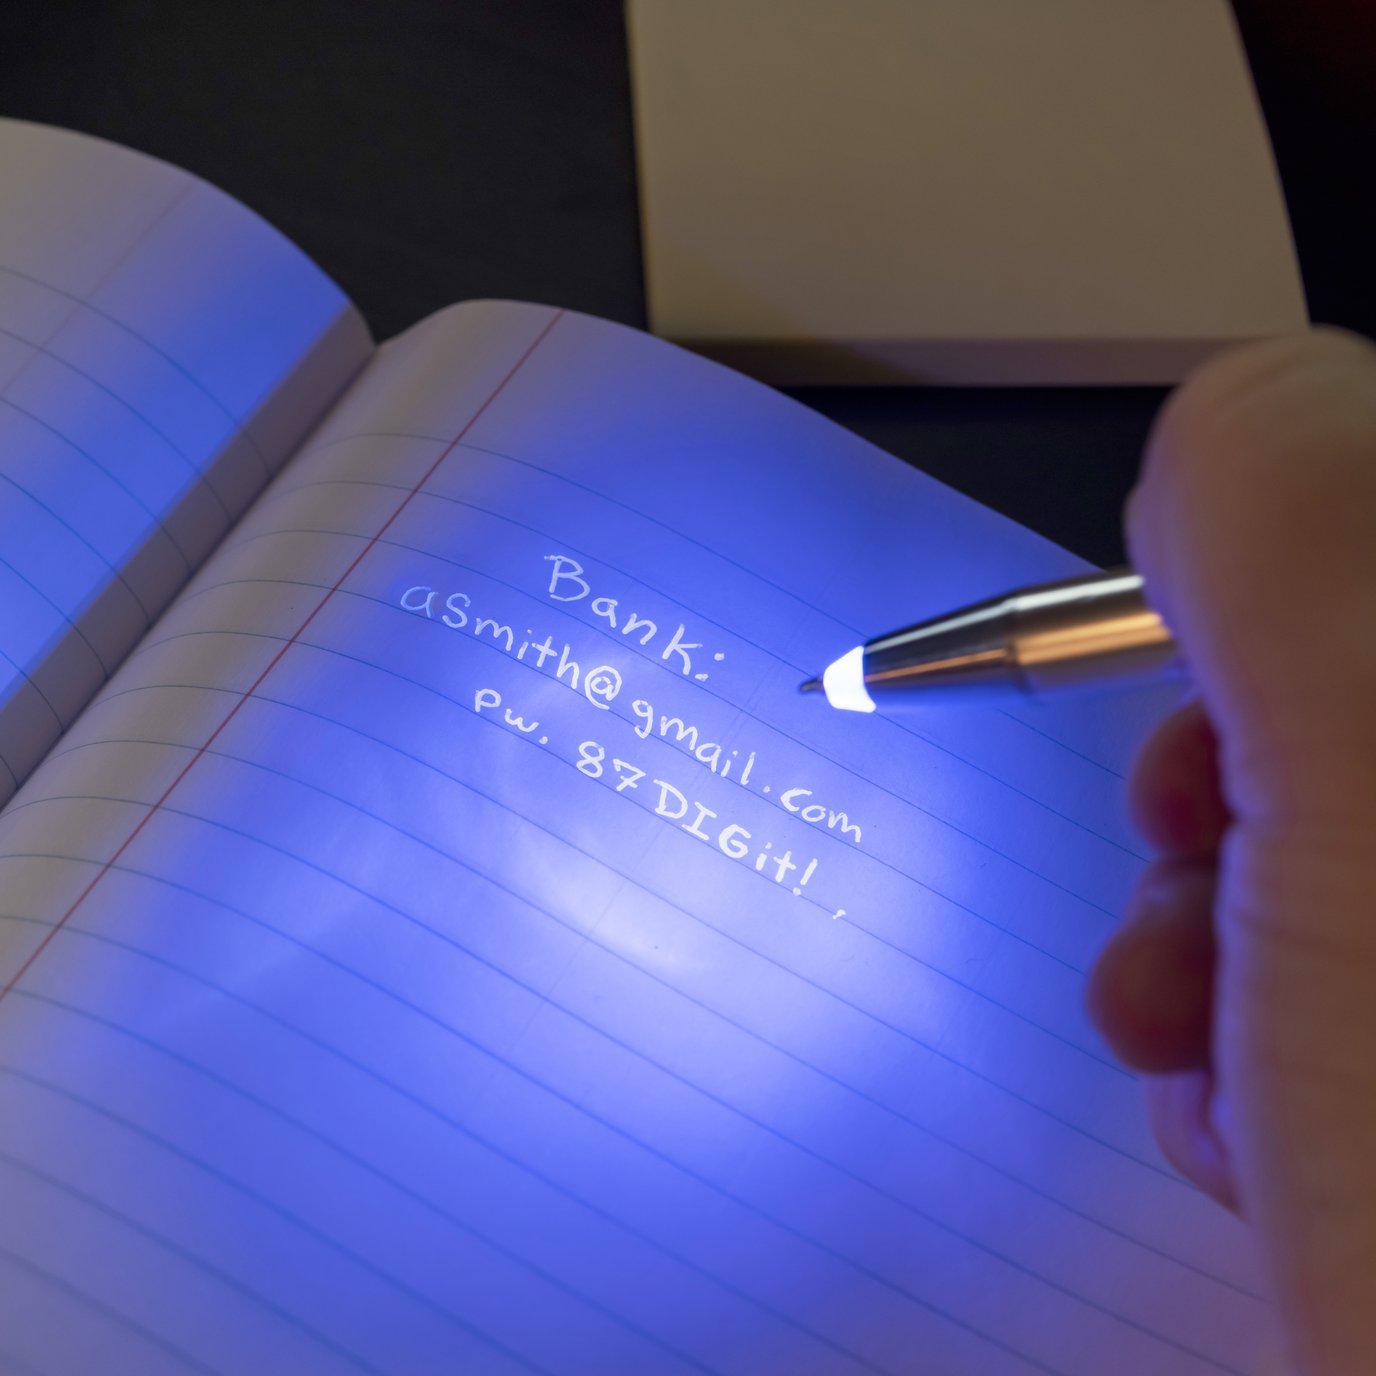 Kikkerland Invisible Pen With UV Light Tip